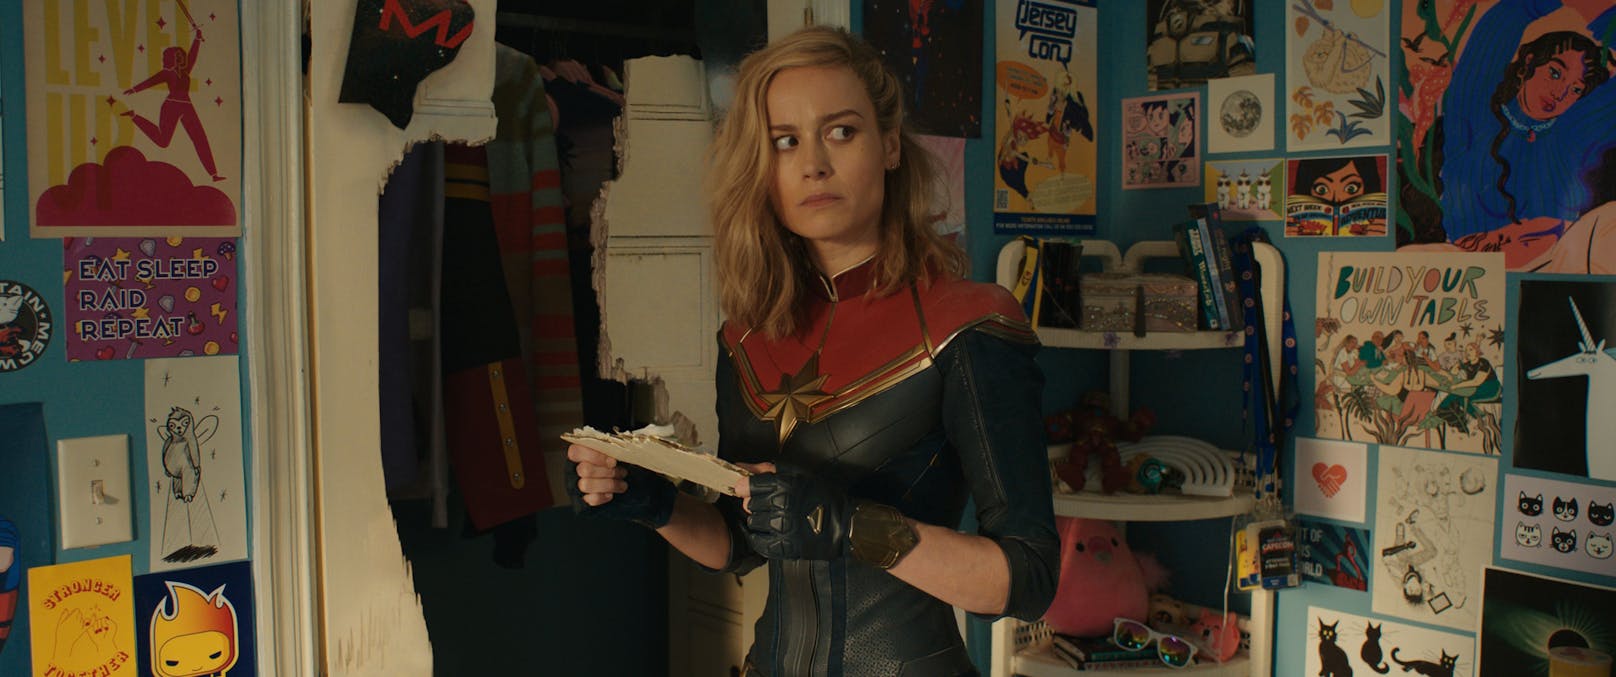 Brie Larson als Captain Marvel/Carol Danvers in Marvel Studios THE MARVELS.